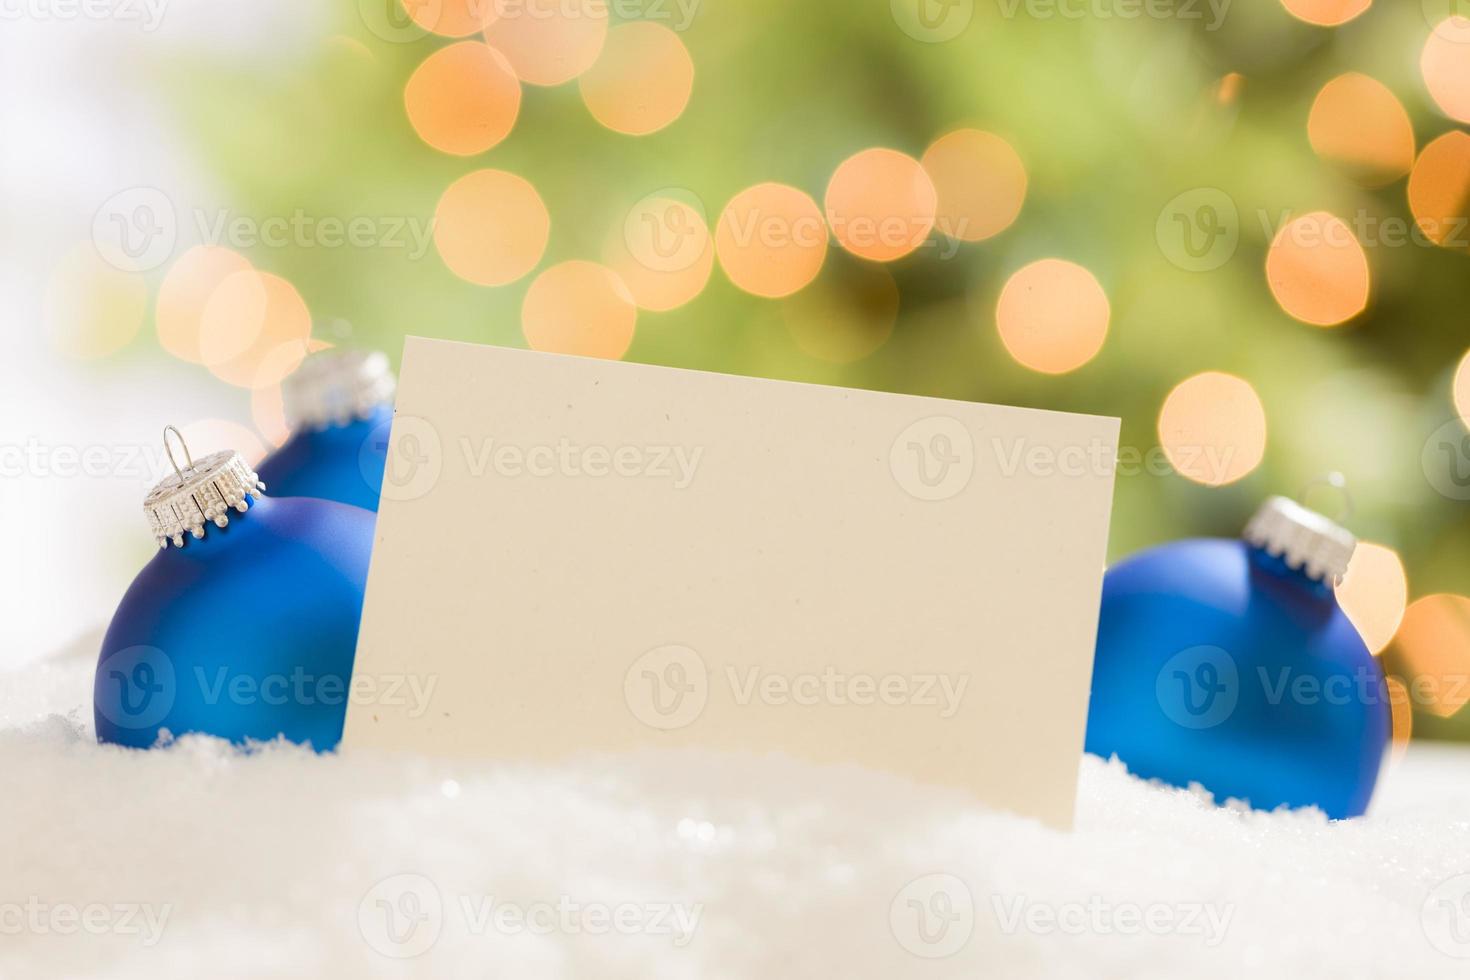 blu Natale ornamenti dietro a vuoto bianco carta foto